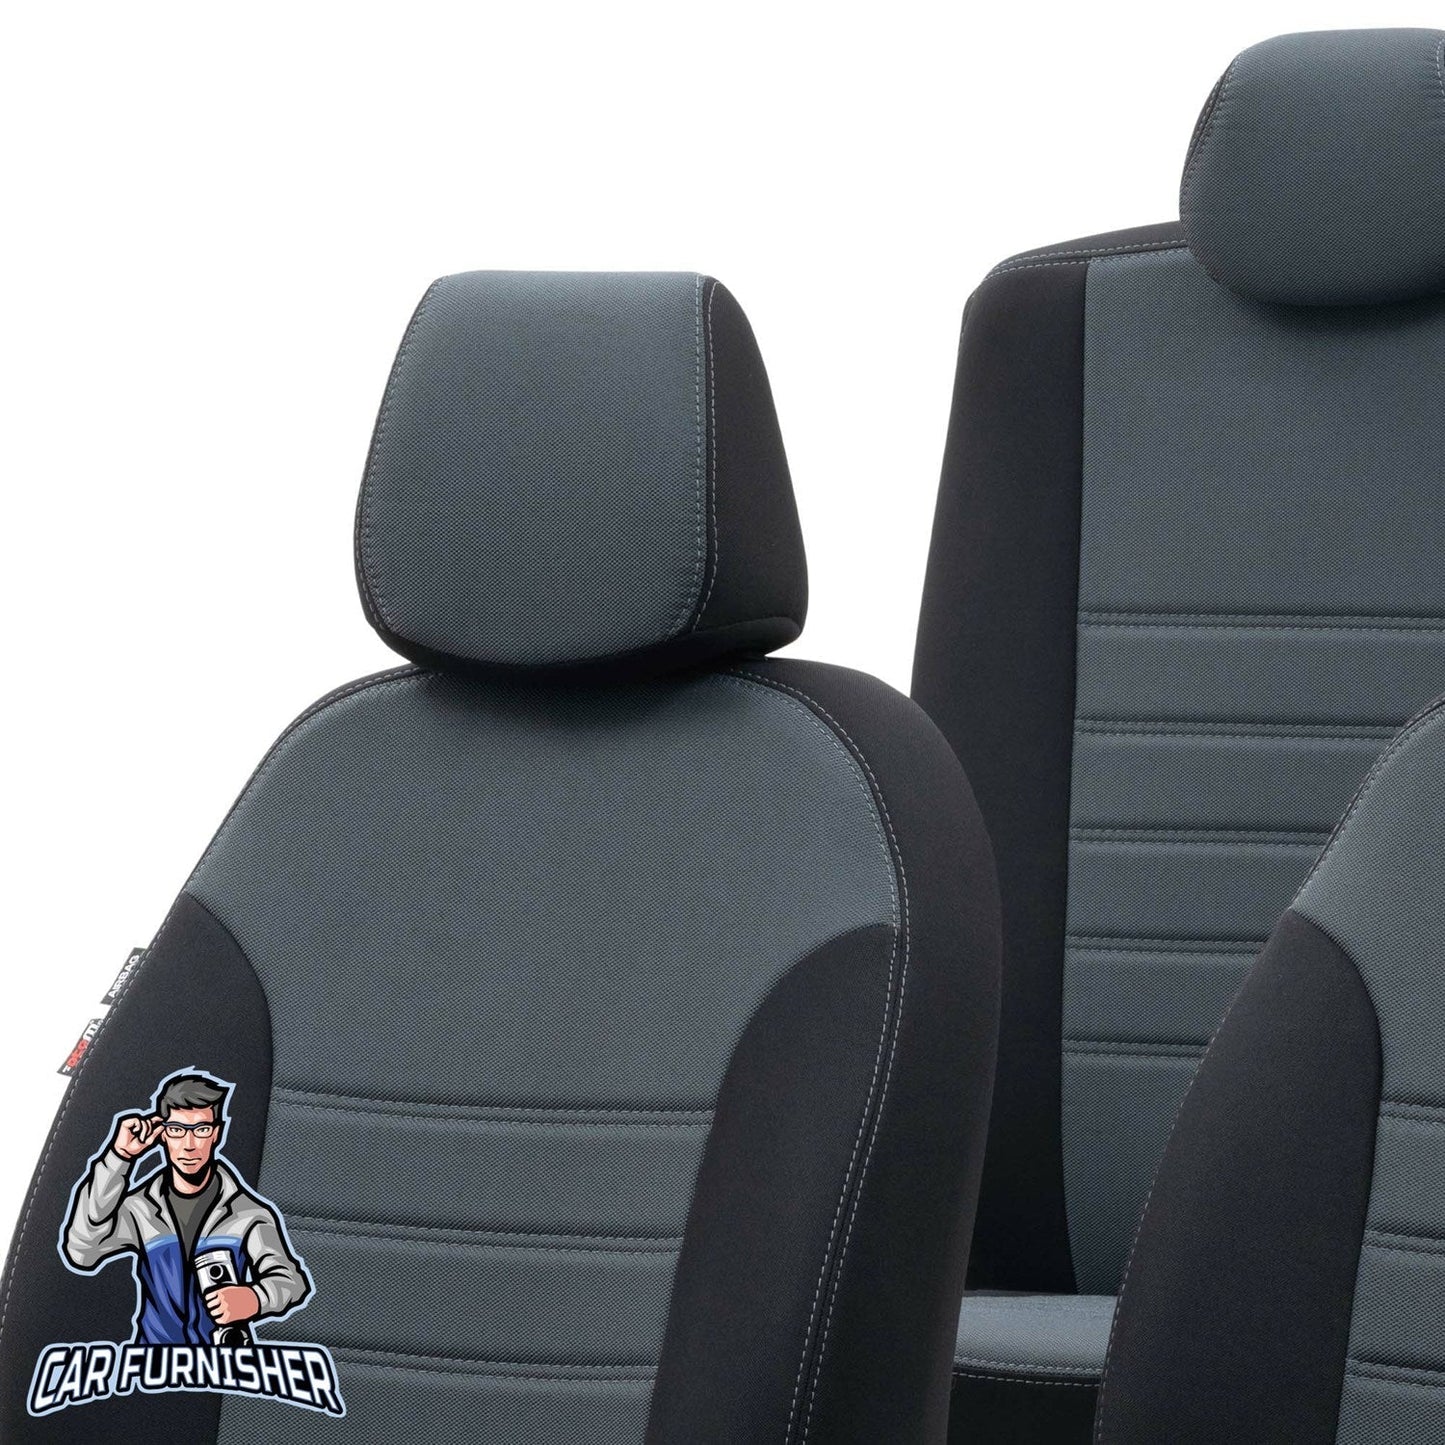 Ford Mondeo Seat Covers Original Jacquard Design Smoked Black Jacquard Fabric